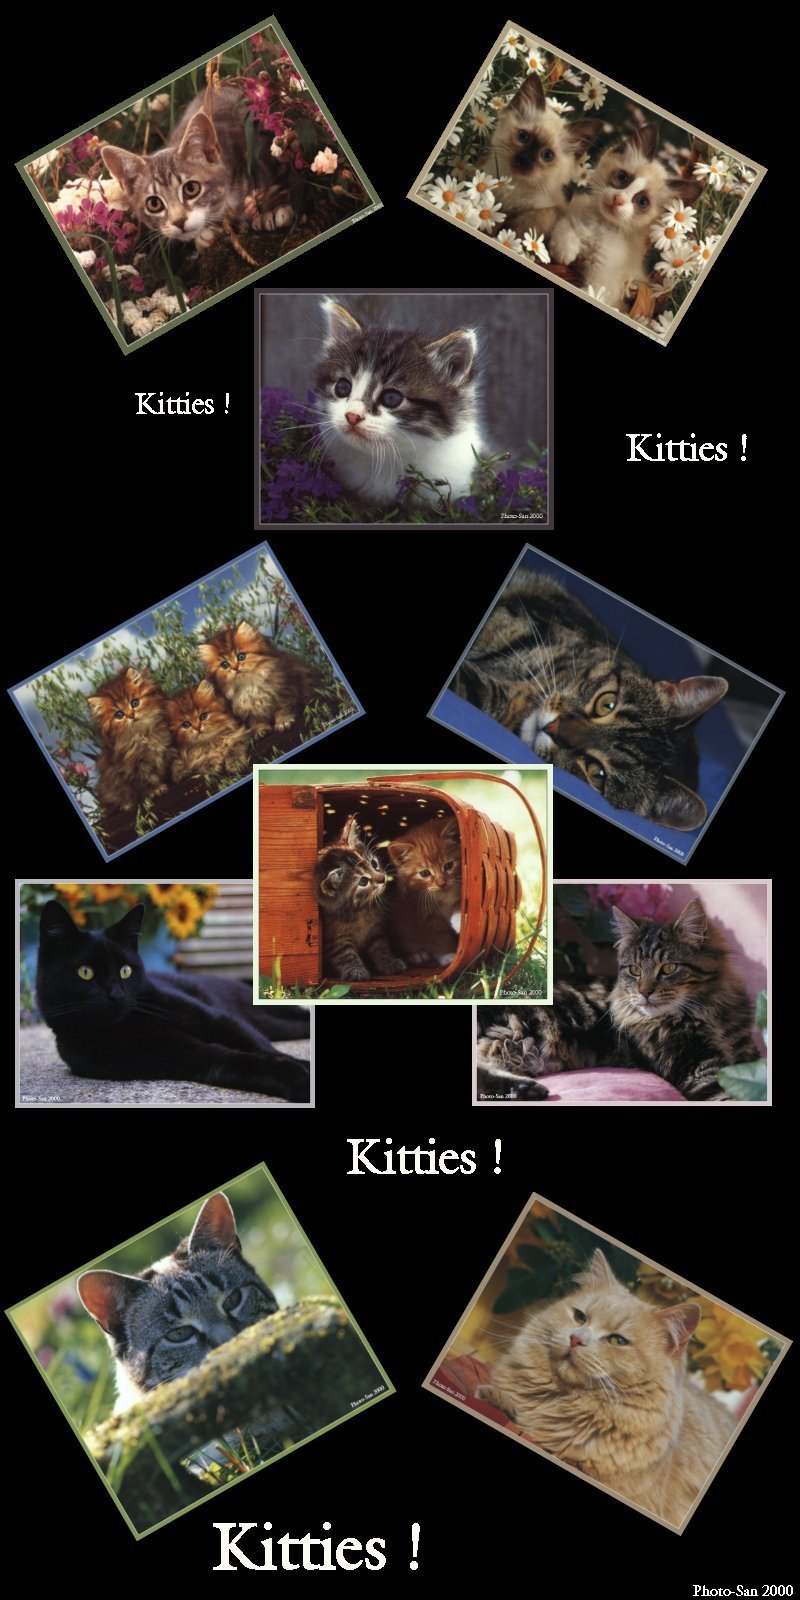 S'more Kitties ( See 003index ) 14 files Total - katscomp.jpg(1/1) 212912 bytes; DISPLAY FULL IMAGE.